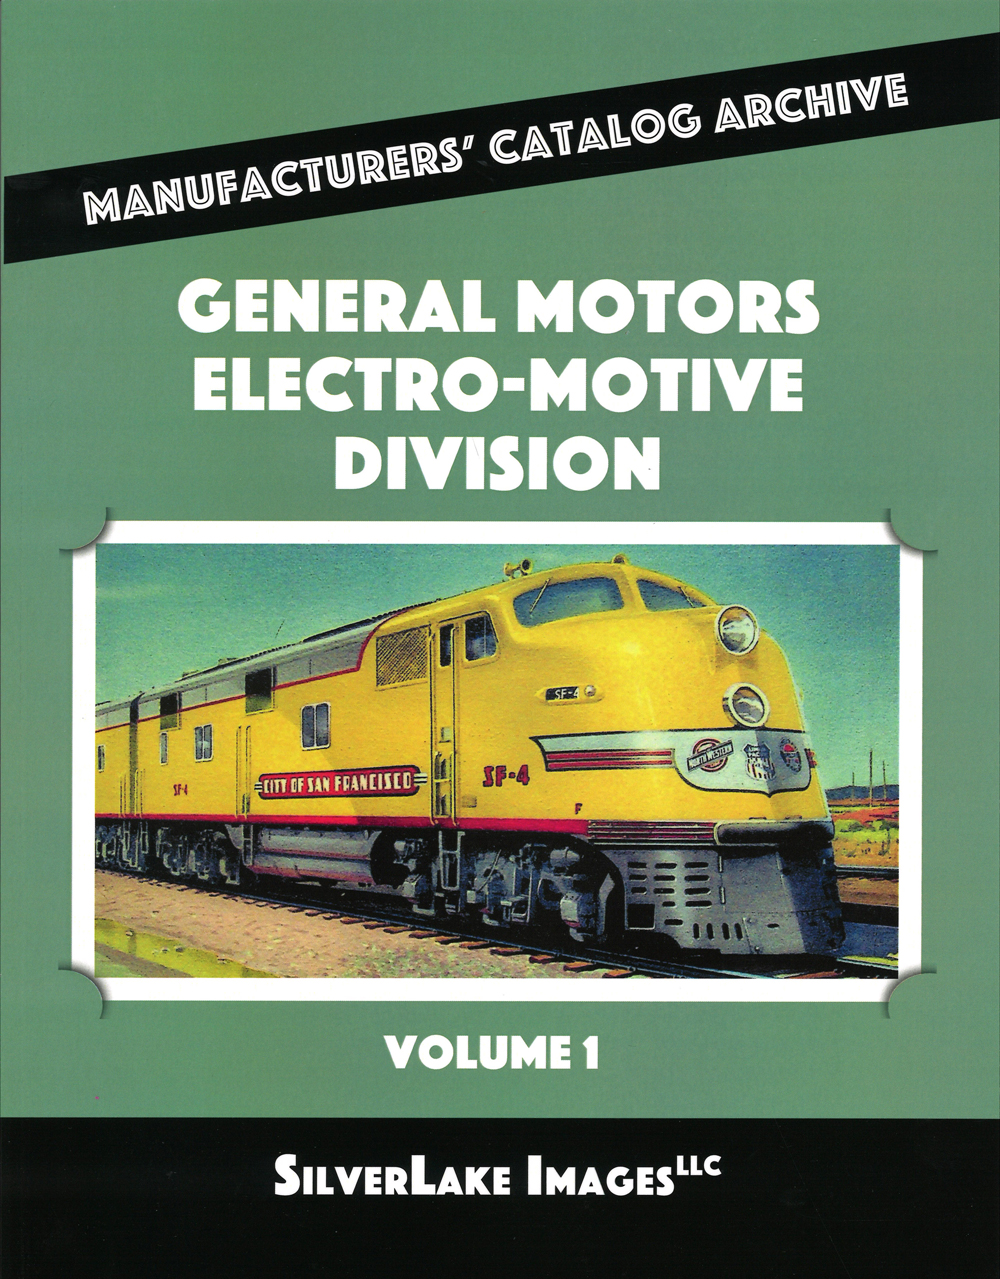 Silver Lake Images LLC Manufacturers’ Catalog Archive series General Motors Electro-Motive Division Volume 1.